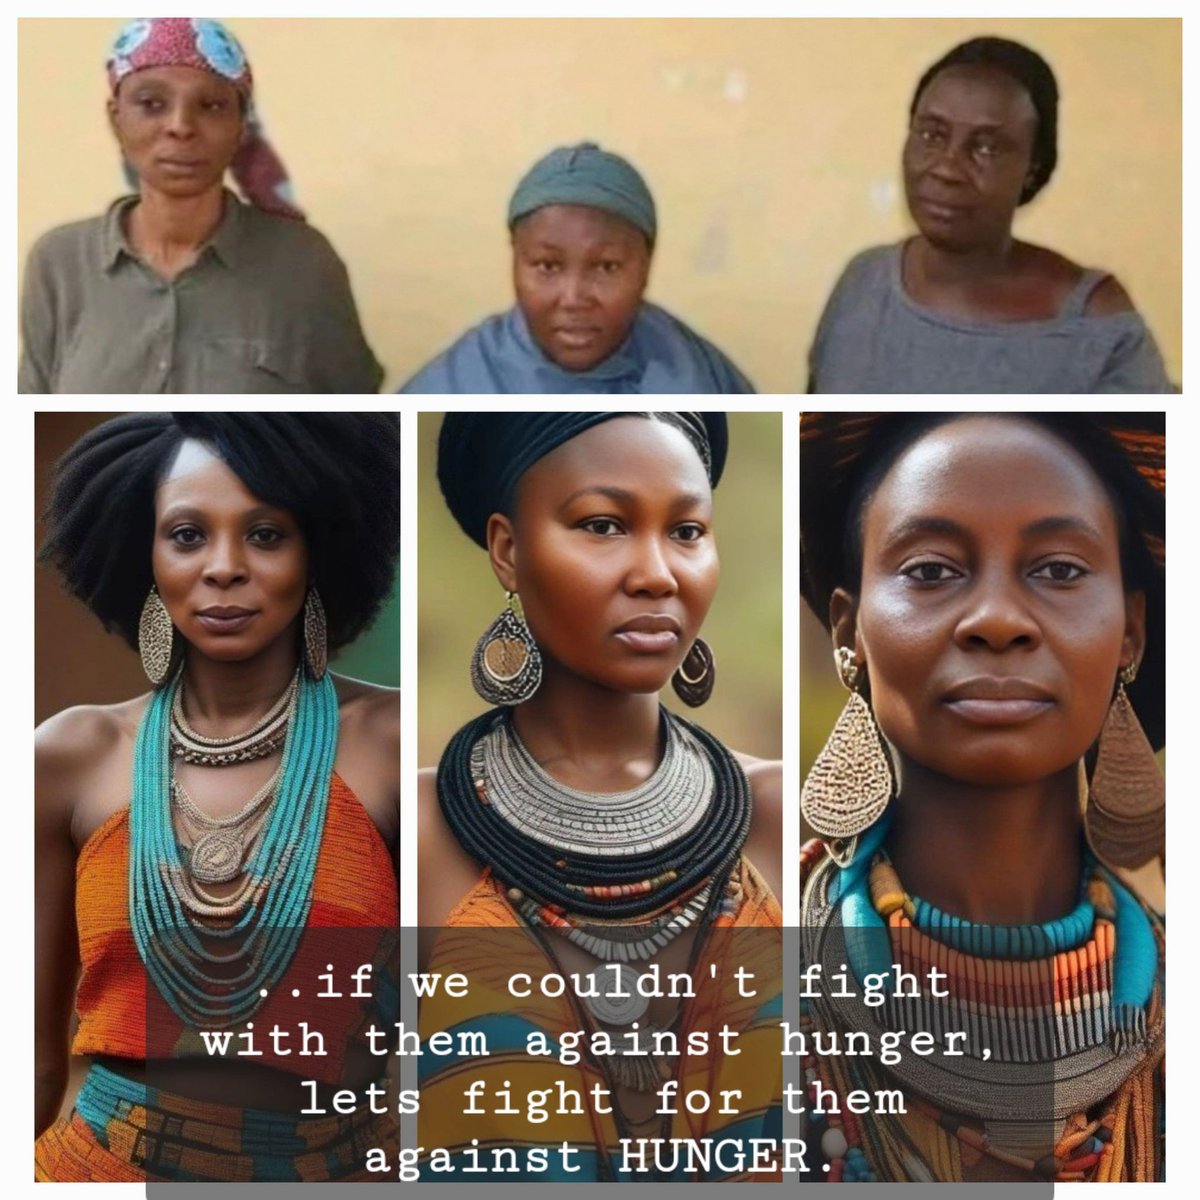 @dj_switchaholic #fightagainsthunger
#heroinesagainsthunger
#freeourminnamothers